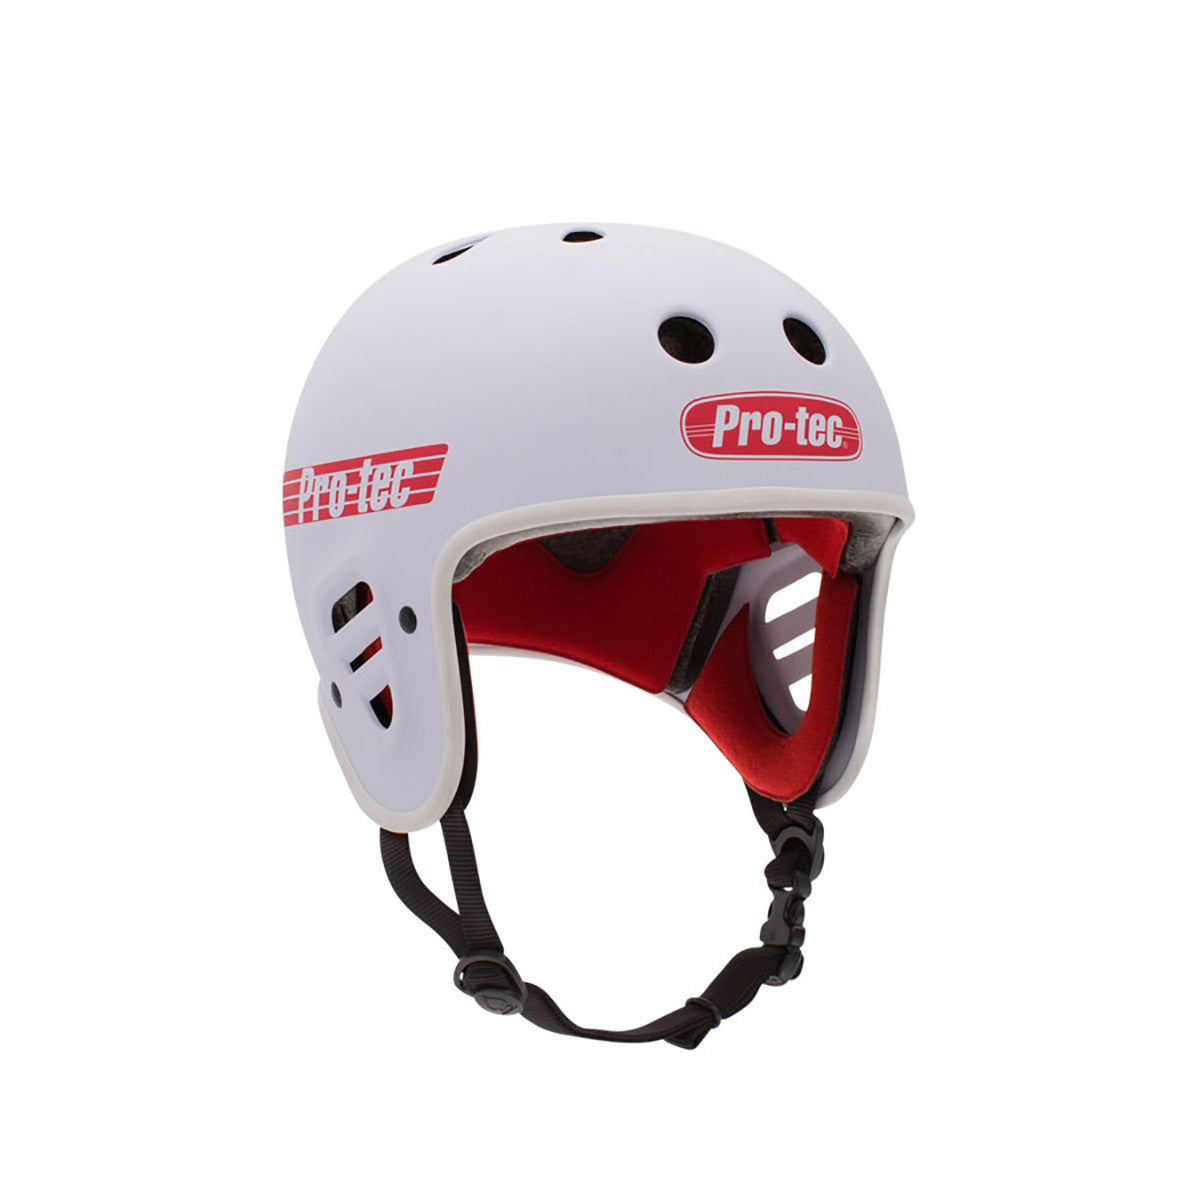 S&M Full Cut Certified Pro-Tec Helmet